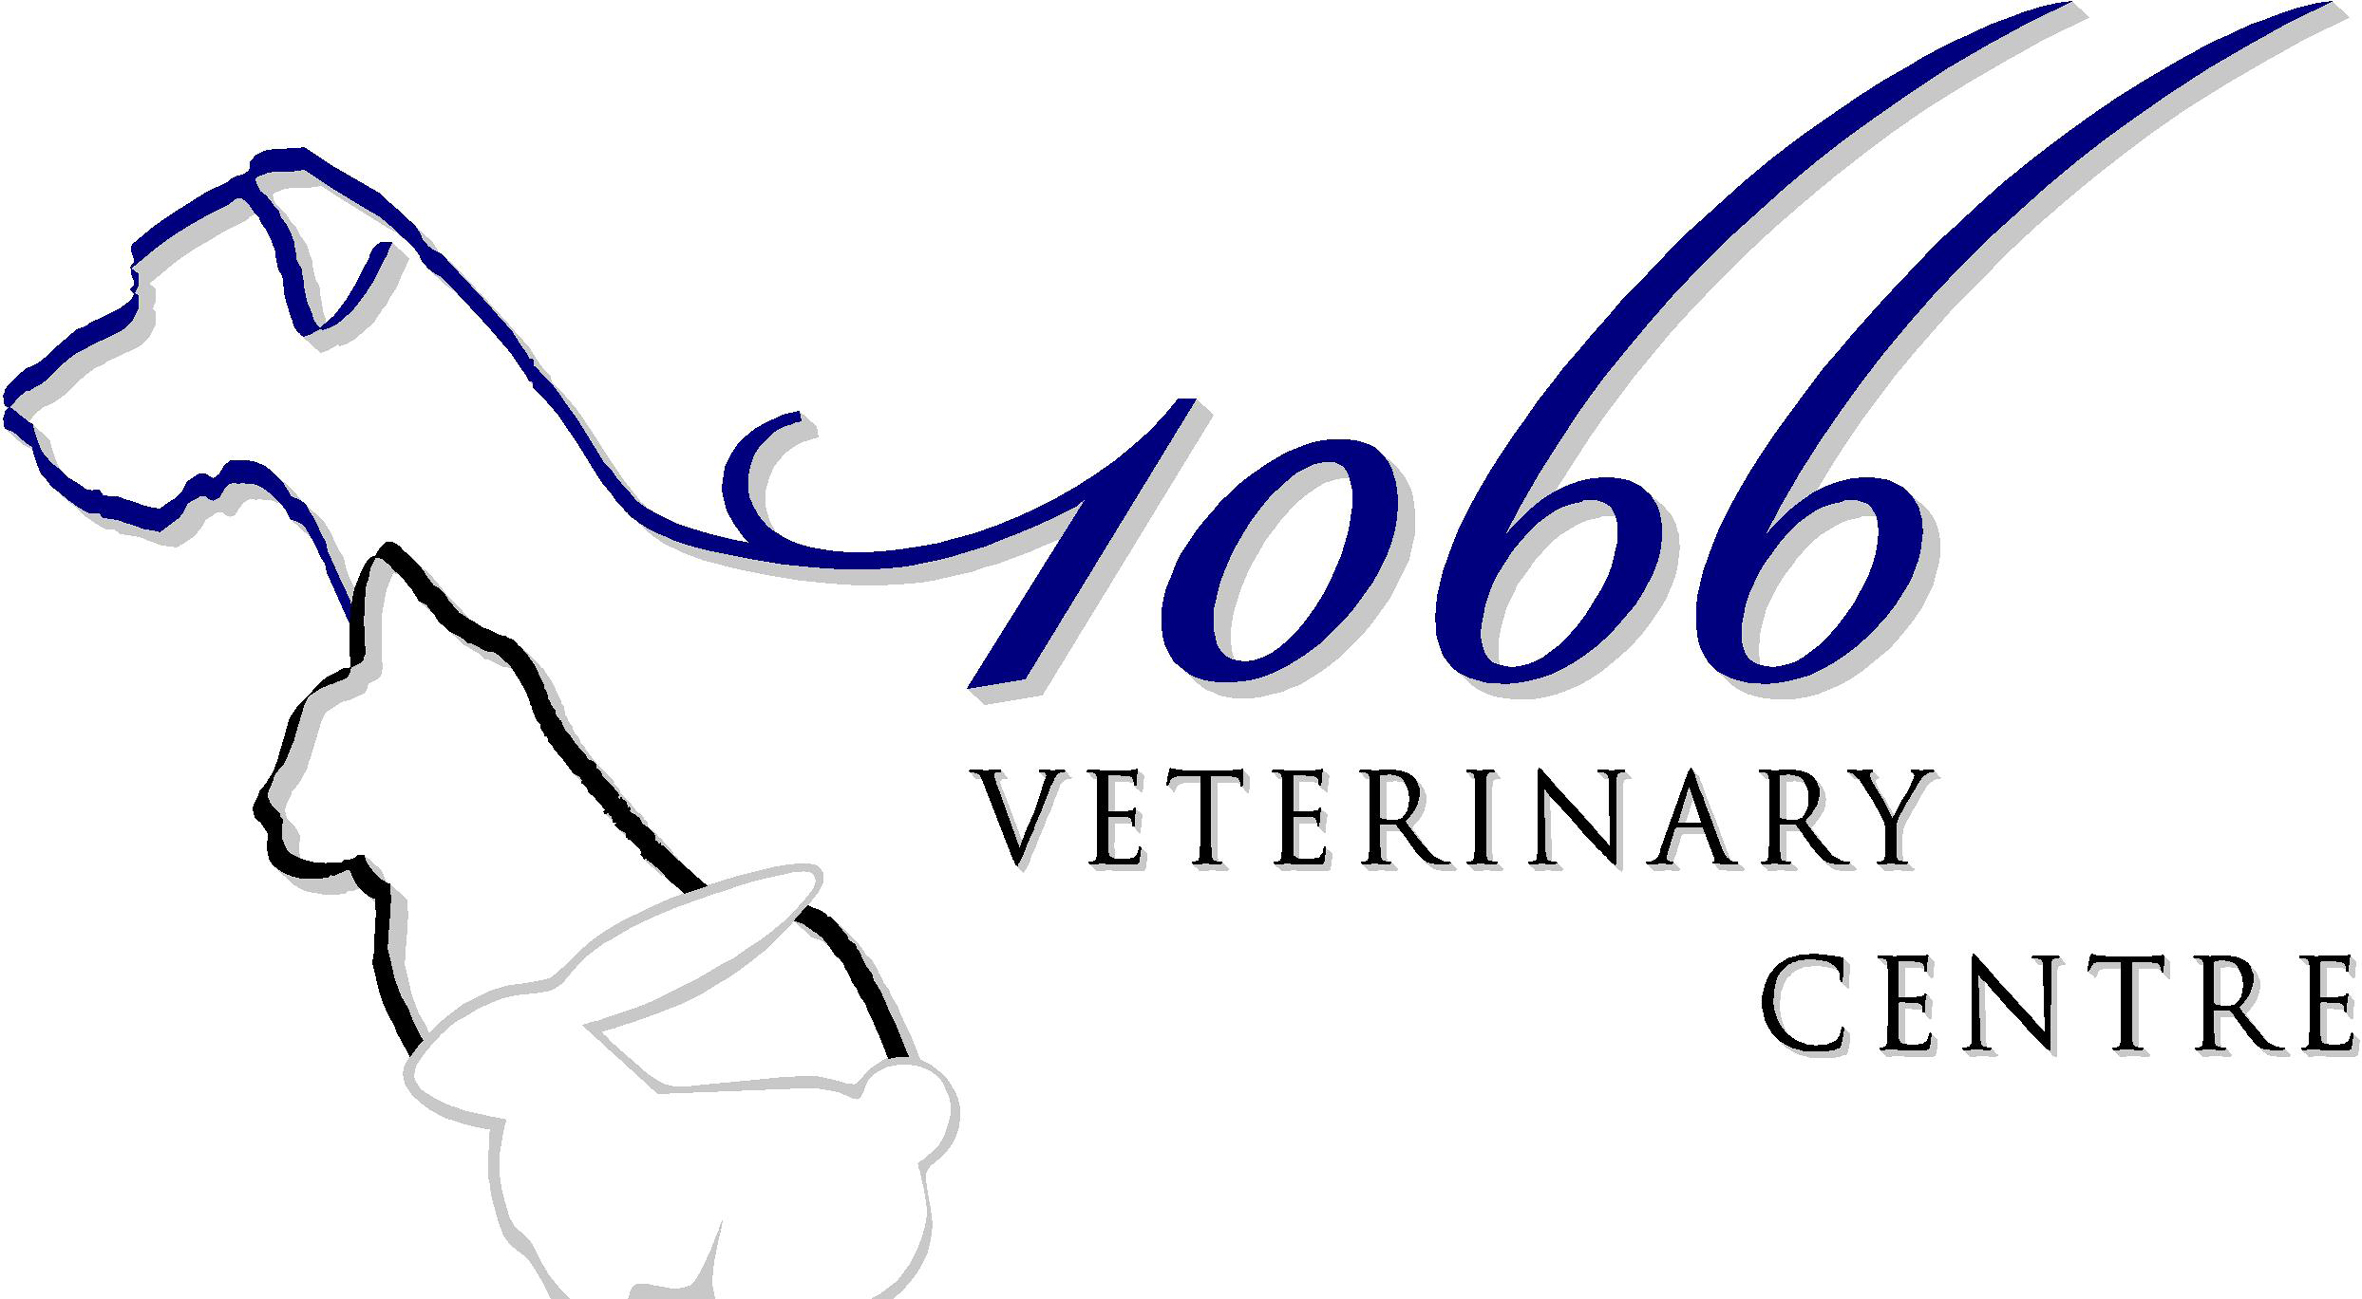 1066 Veterinary Centre